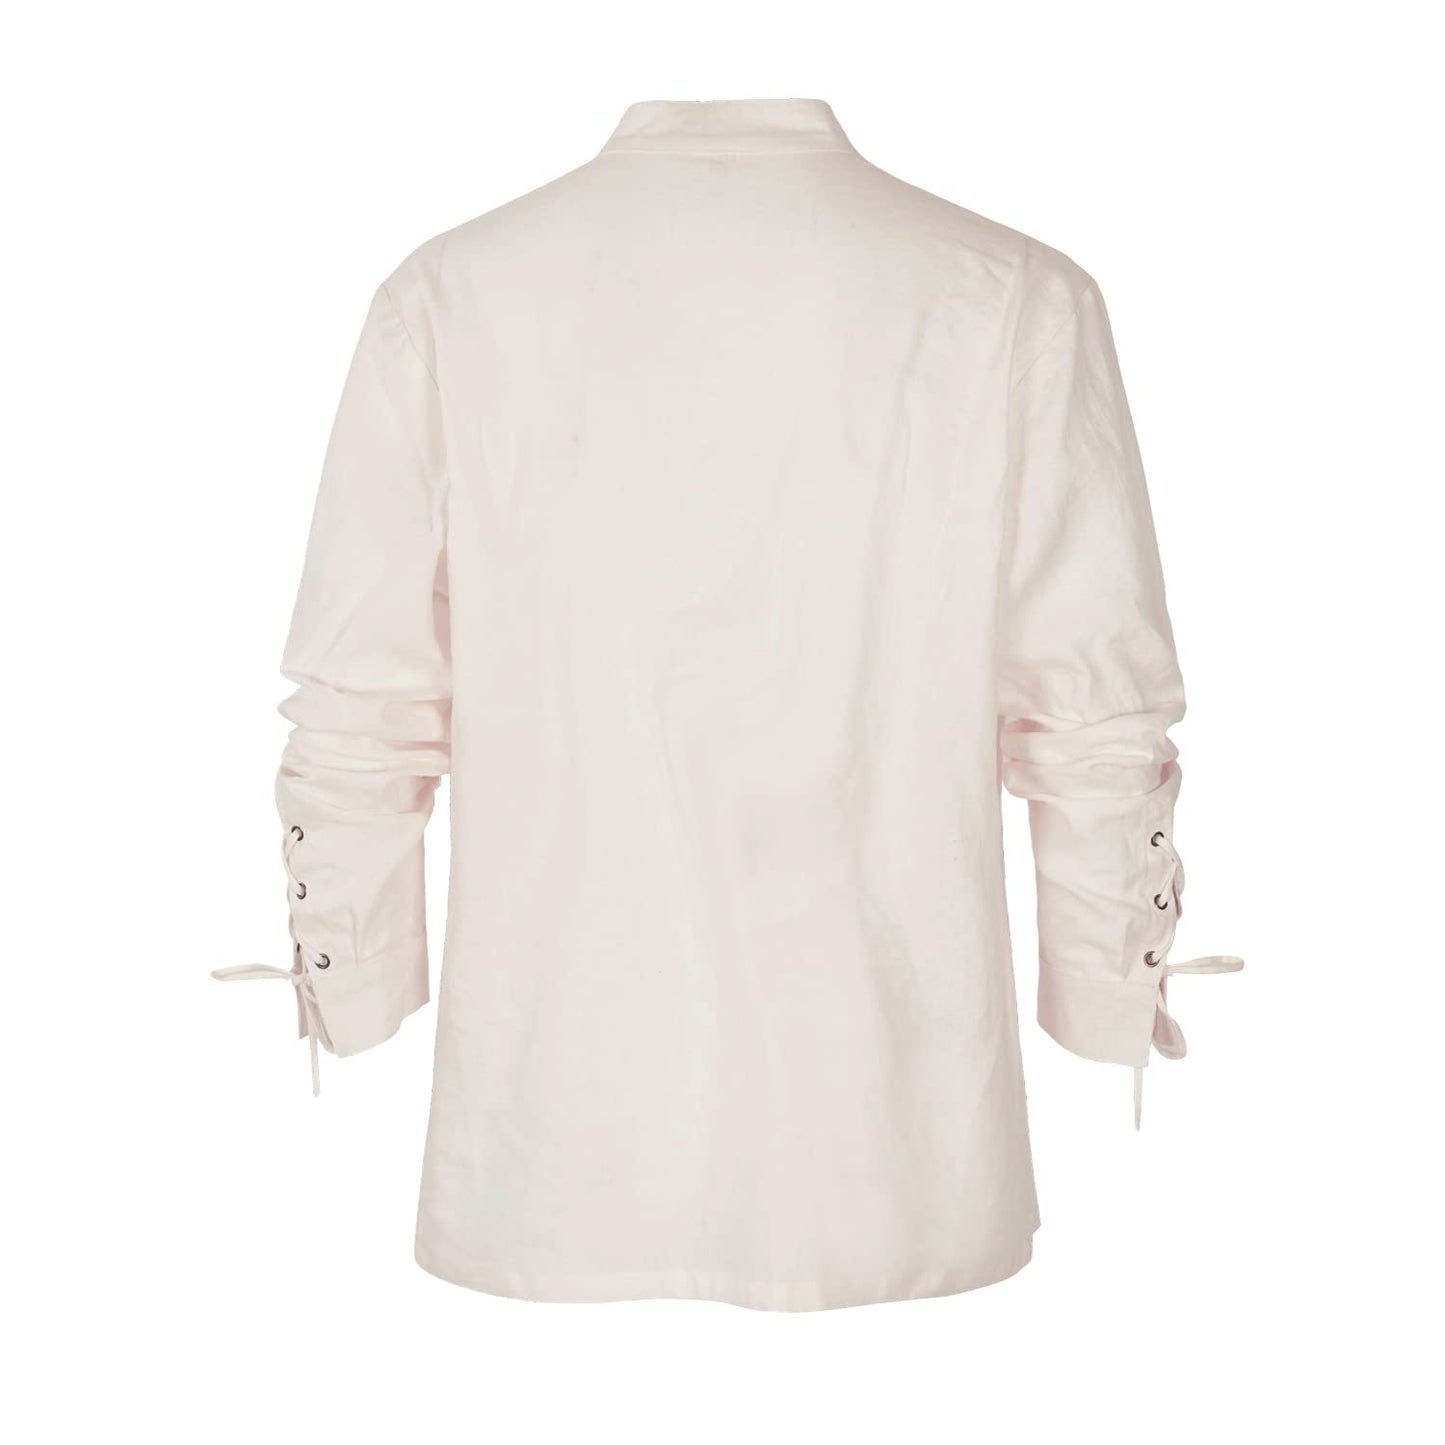 Men's Renaissance Shirt Pirate Medieval Viking top Linen Long Sleeved Halloween Costume Large Z2826wh